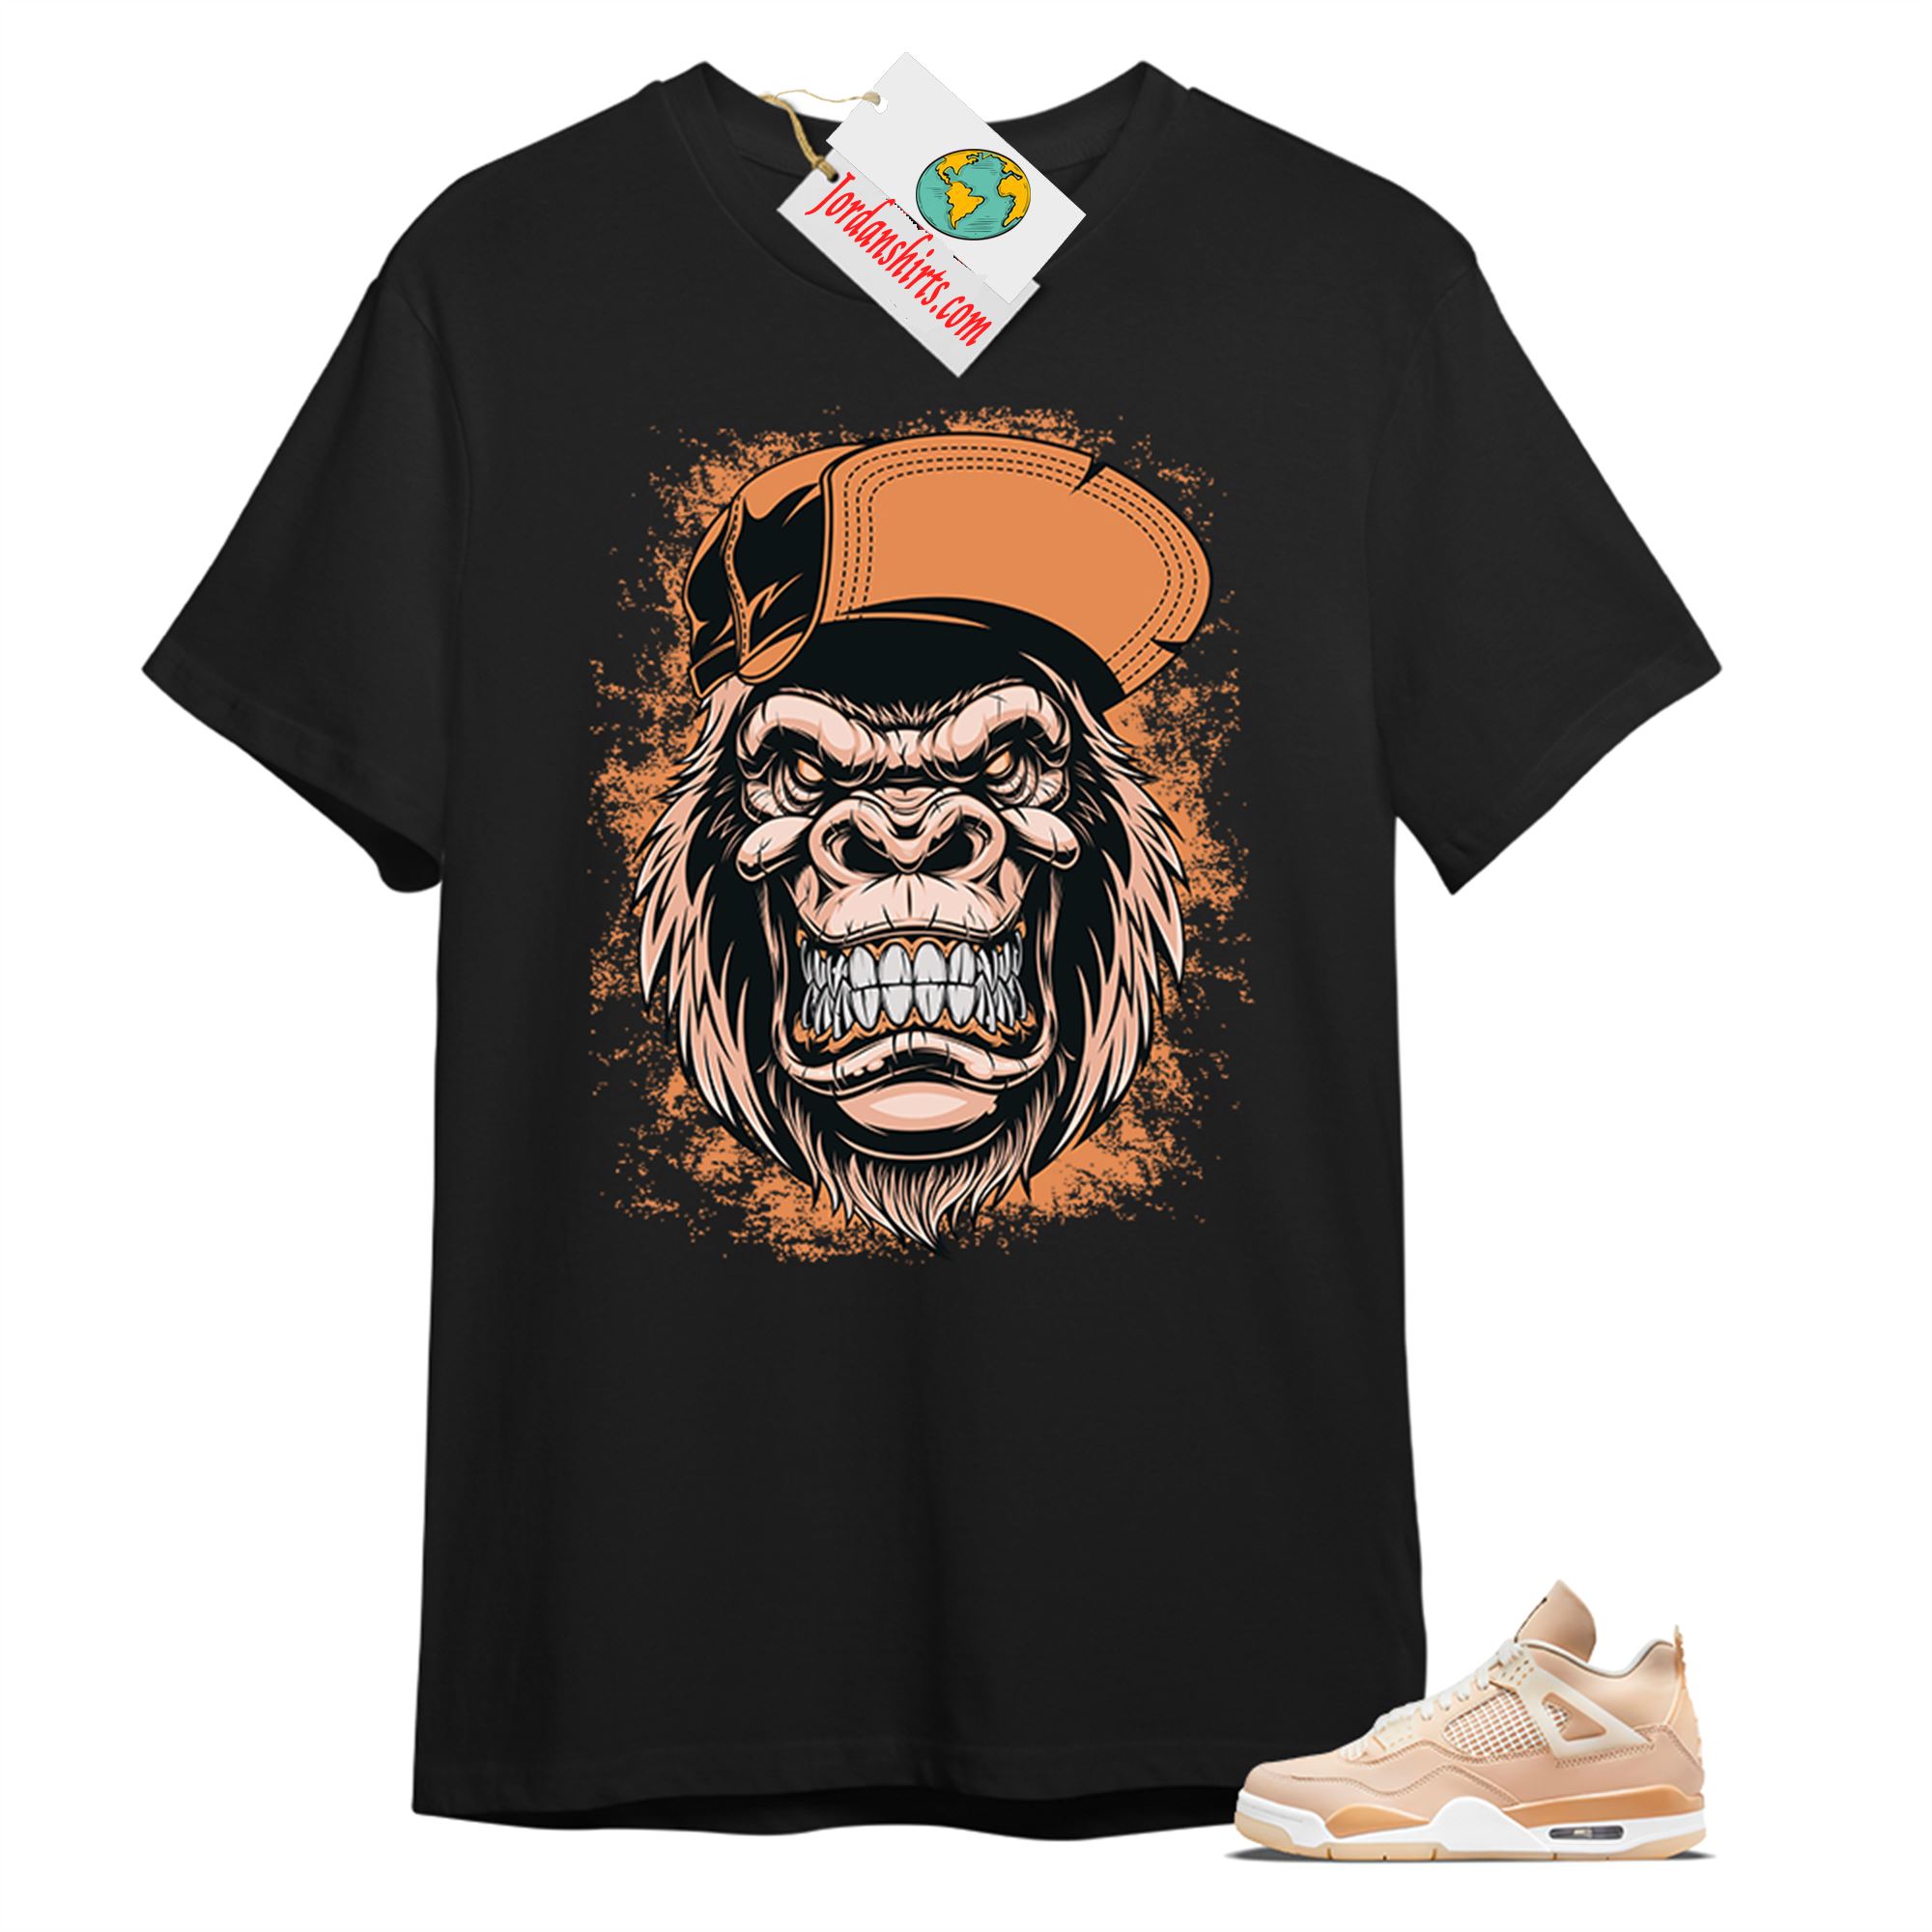 Jordan 4 Shirt, Ferocious Gorilla Black T-shirt Air Jordan 4 Shimmer 4s Plus Size Up To 5xl